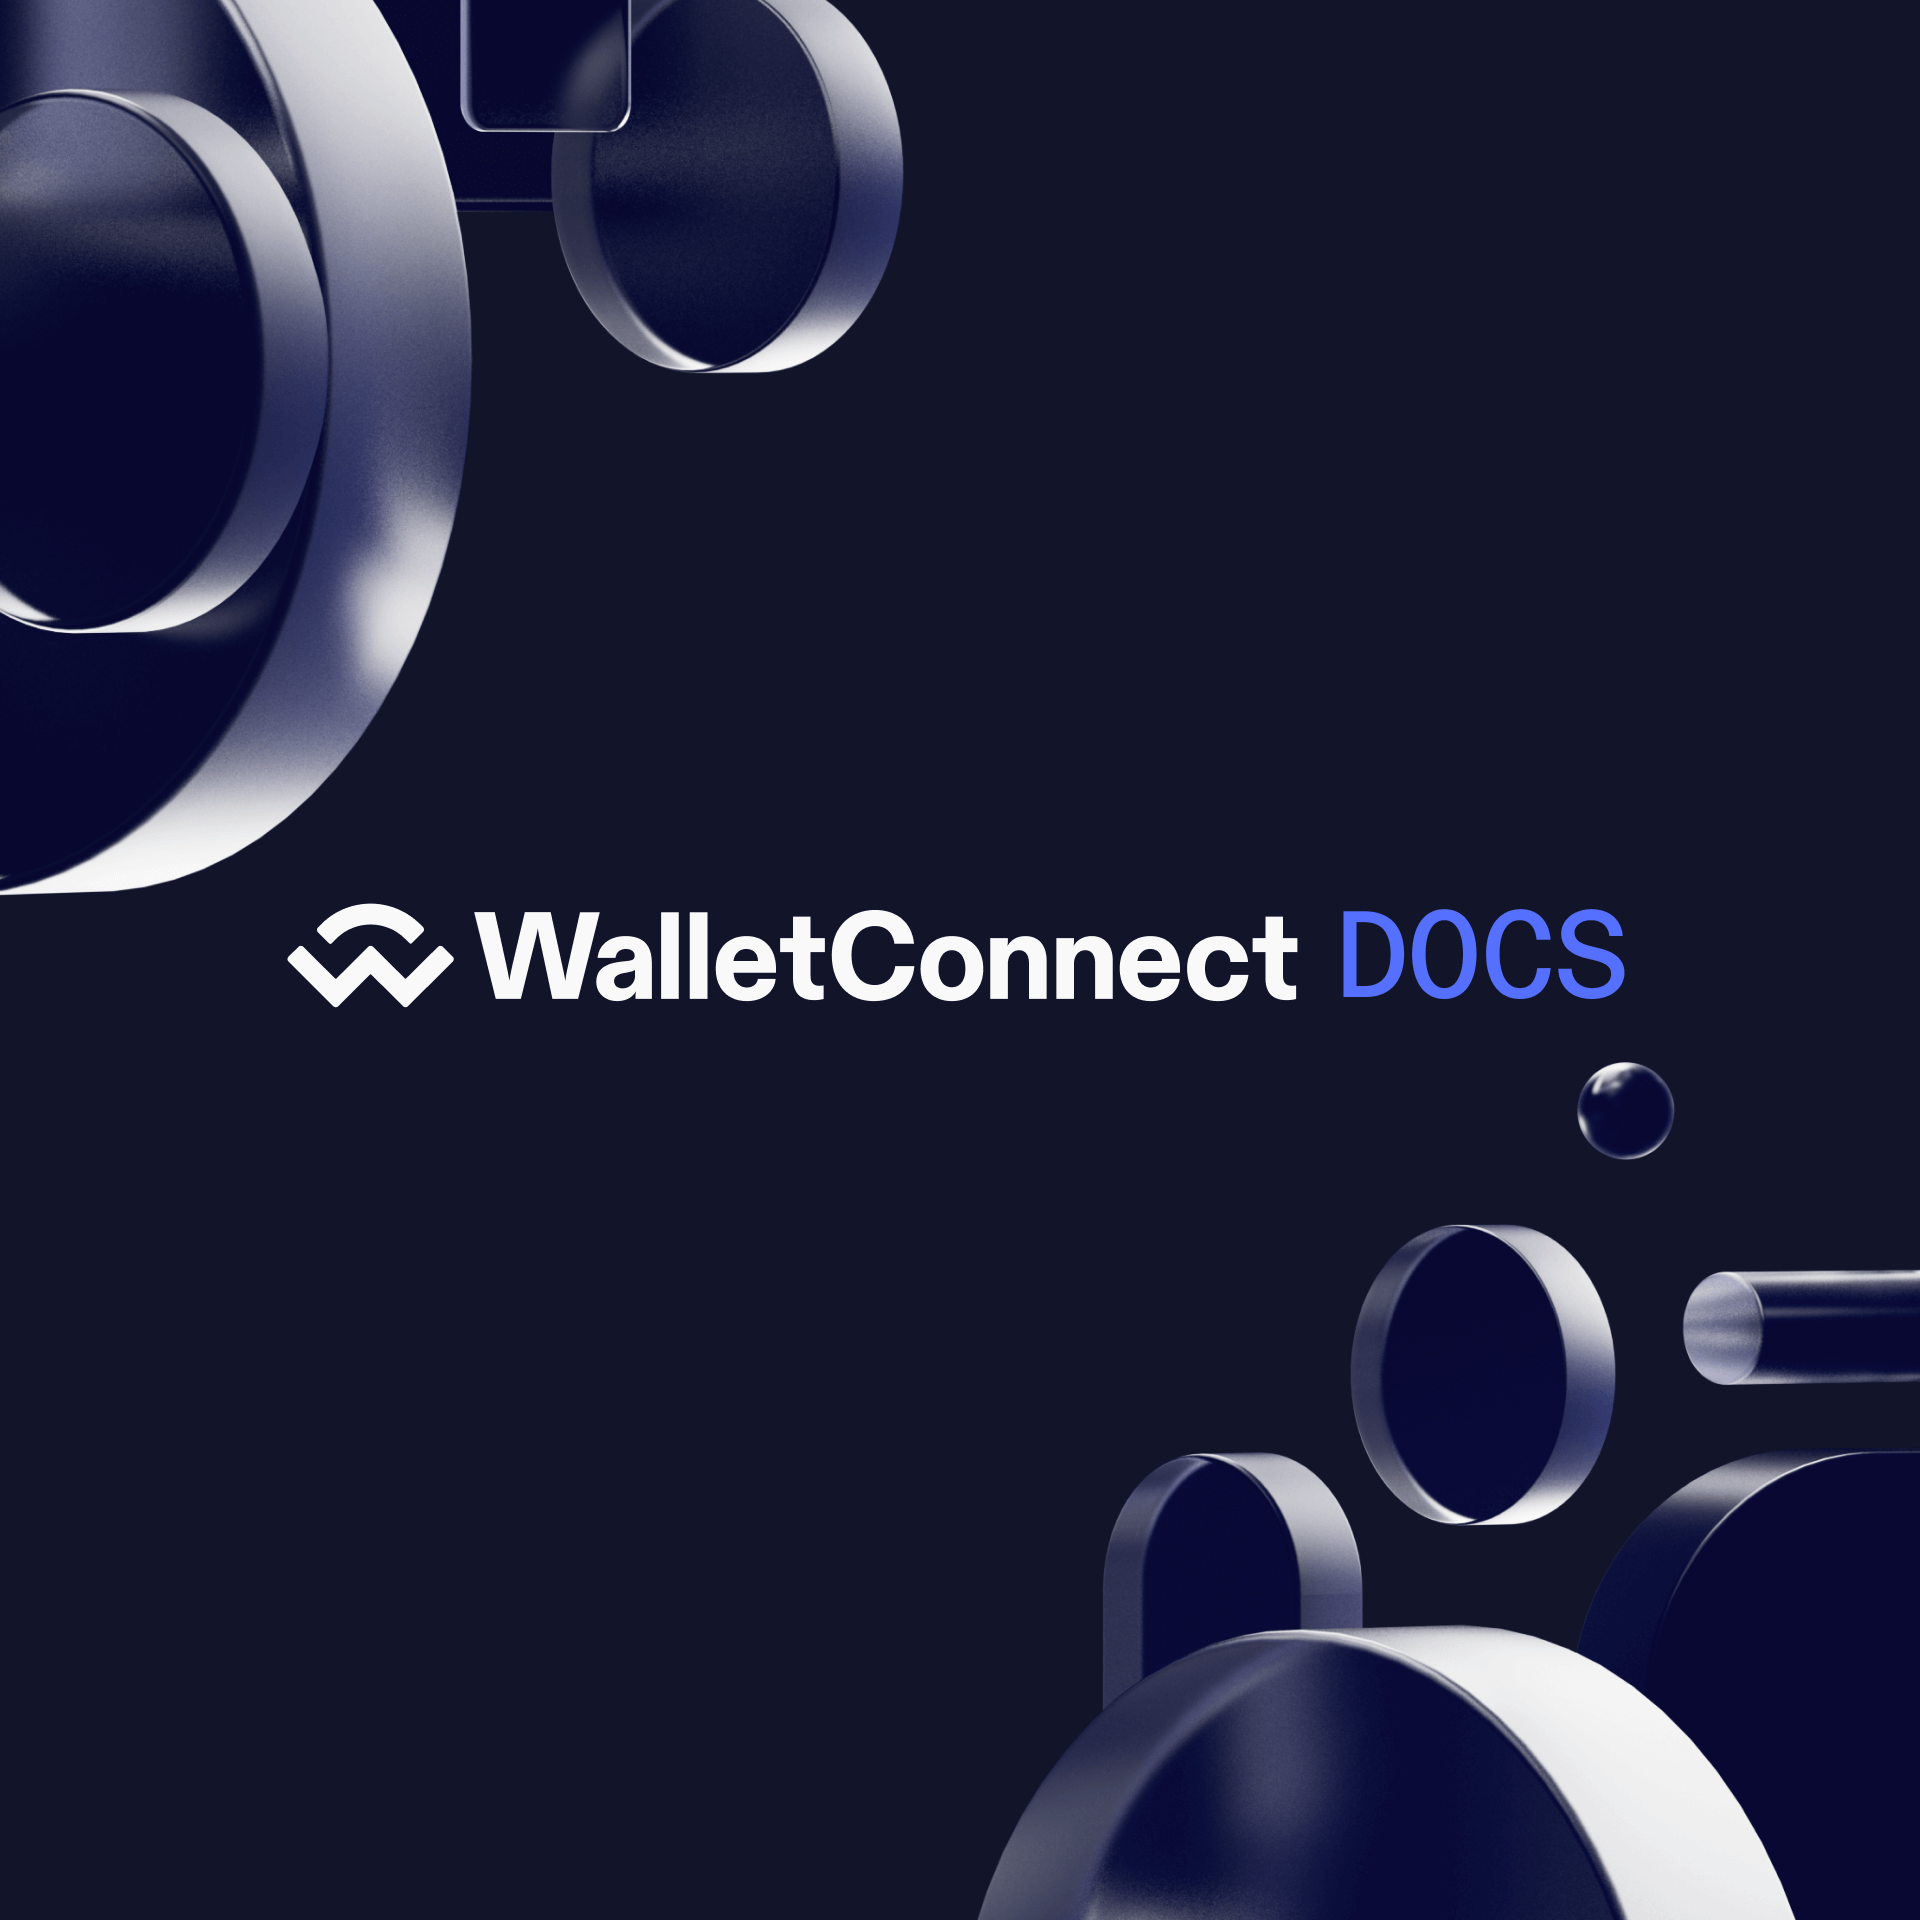 Alpha wallet connect - Documentation